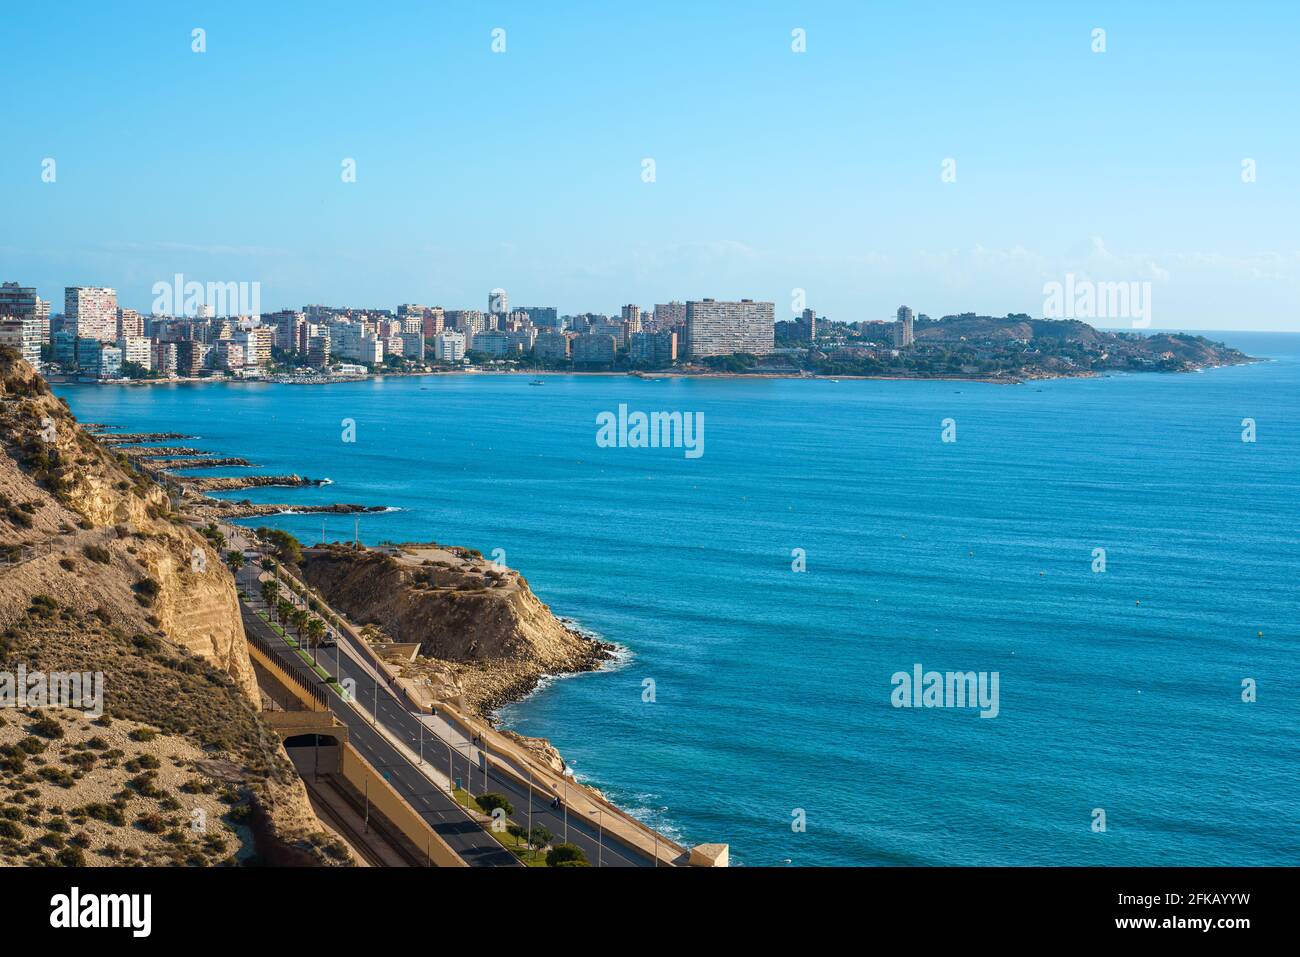 View of San Juan de Alicante district from a top view. Touristic city in Costa blanca. Mediterranean Sea. Region of Valencia, Spain Stock Photo